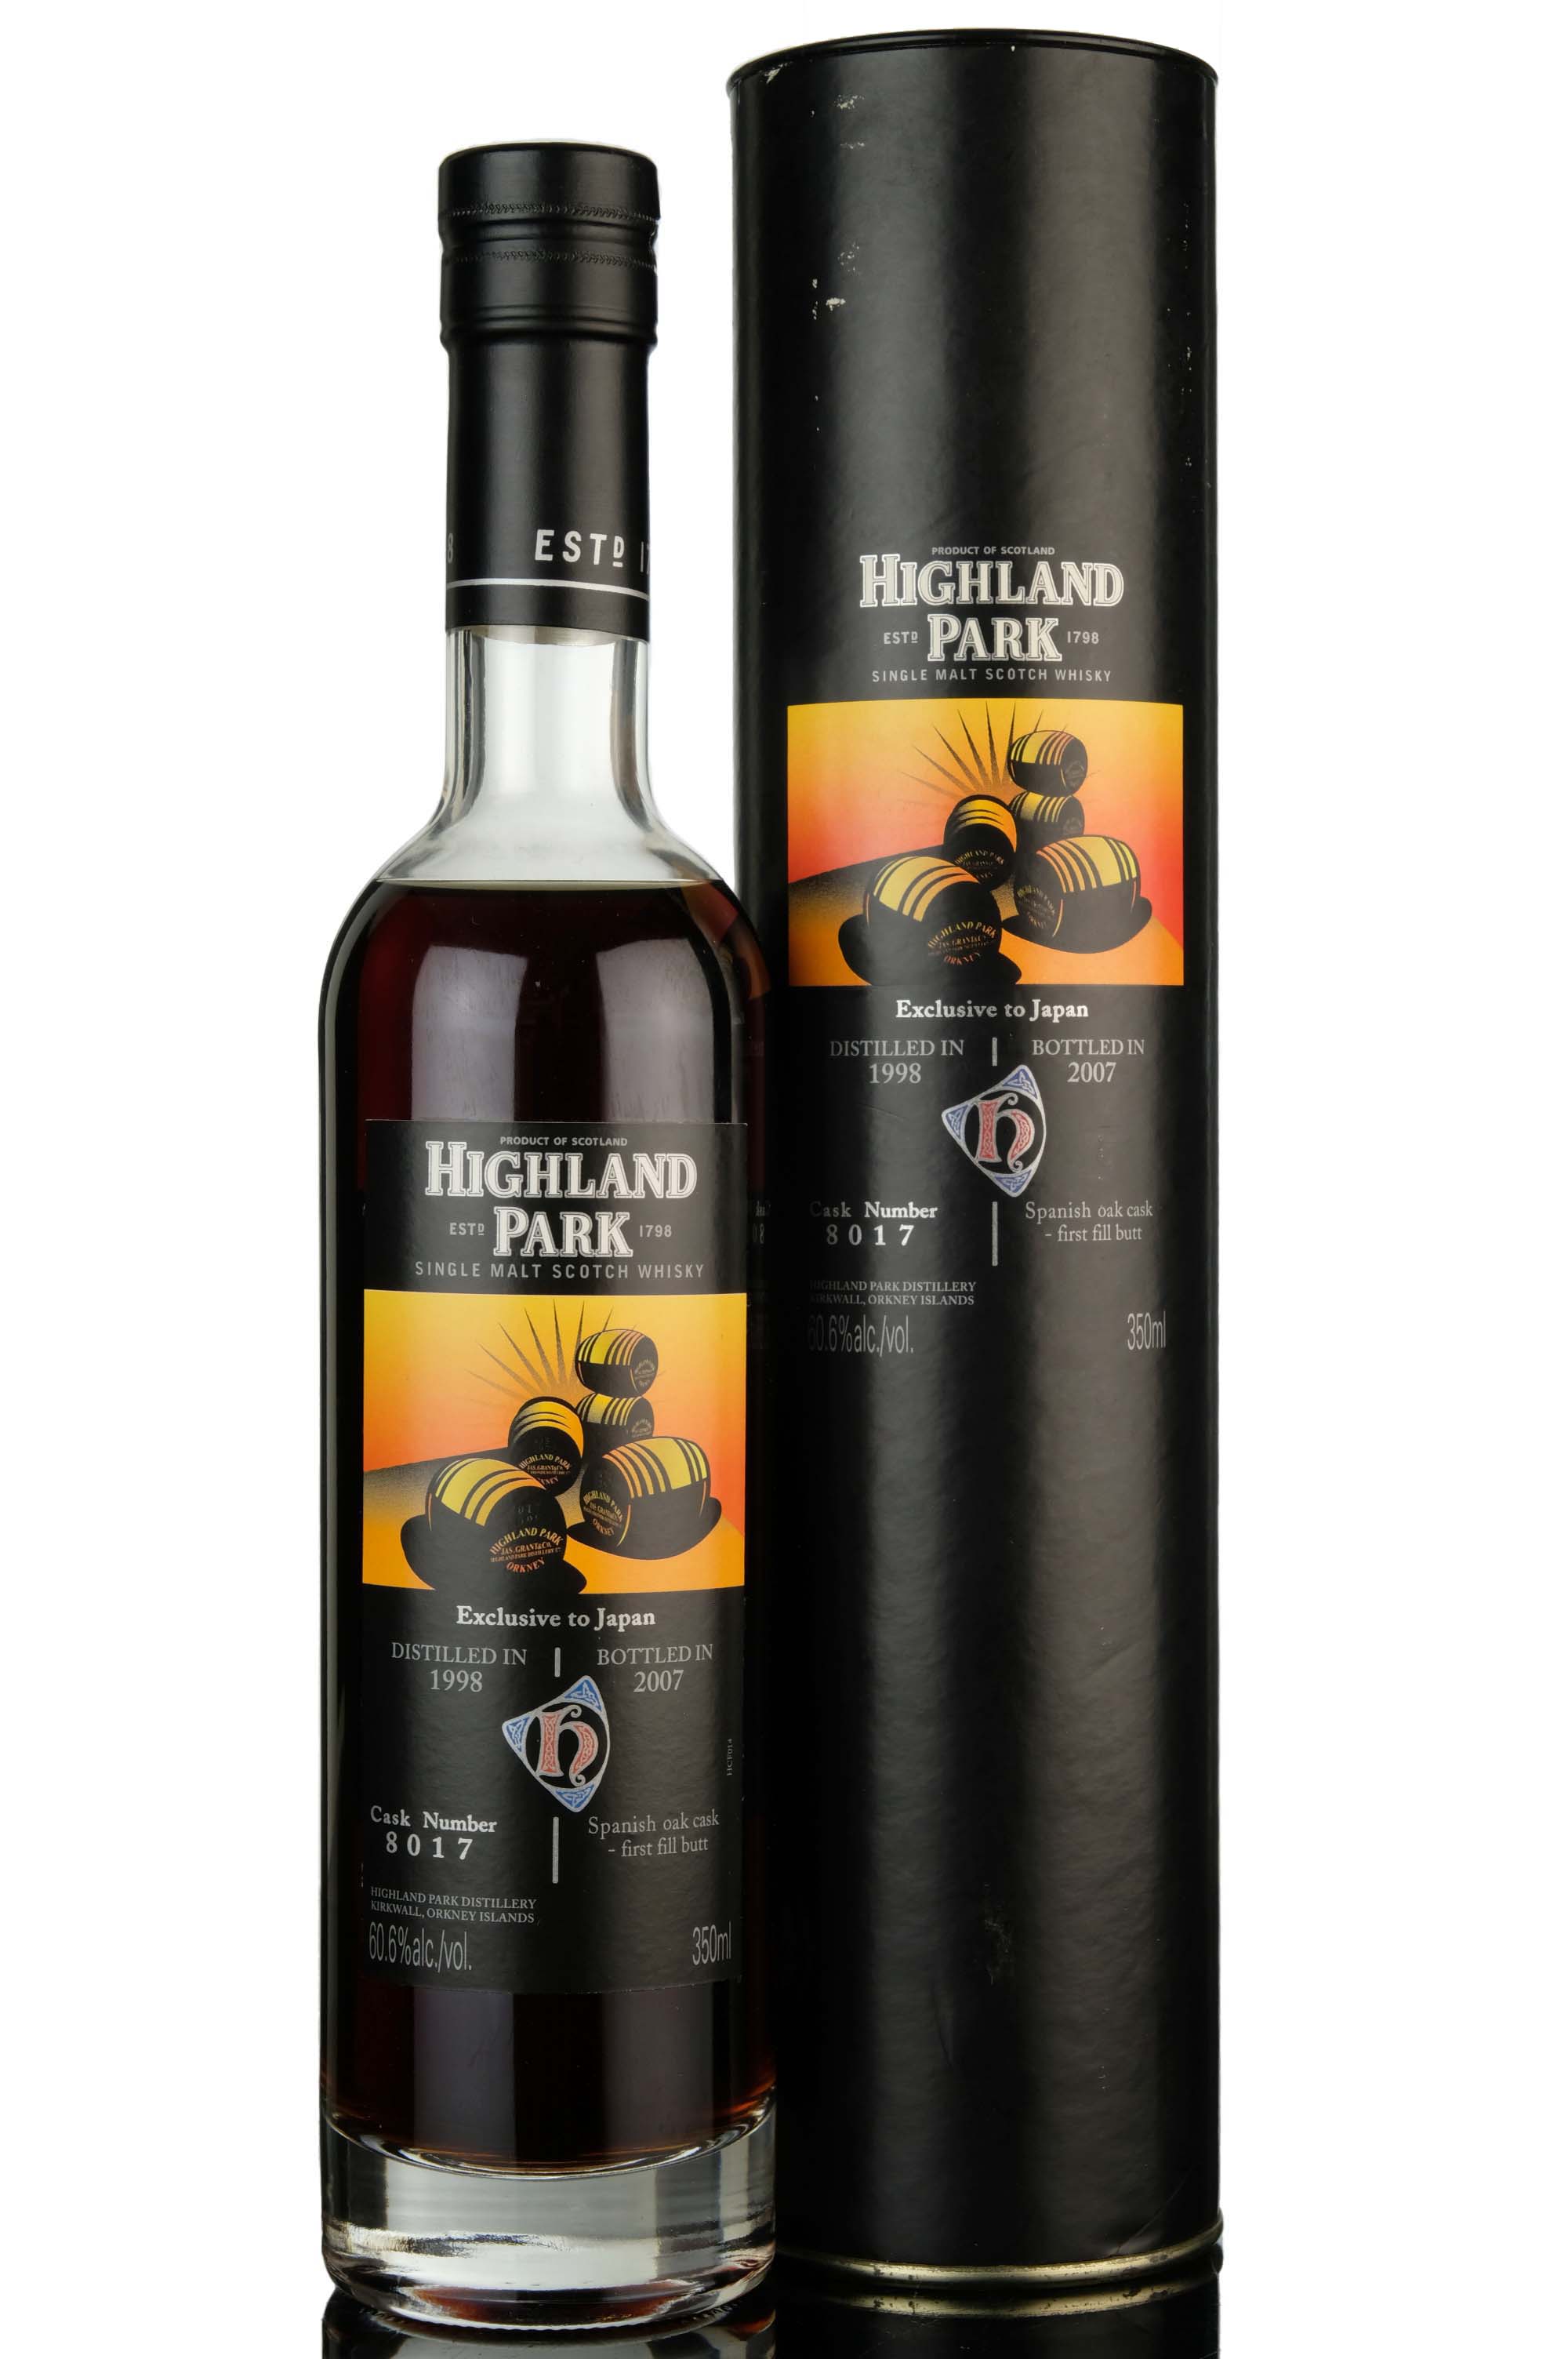 Highland Park 1998-2007 - Single Cask 8017 - Exclusive to Japan - Half Bottle